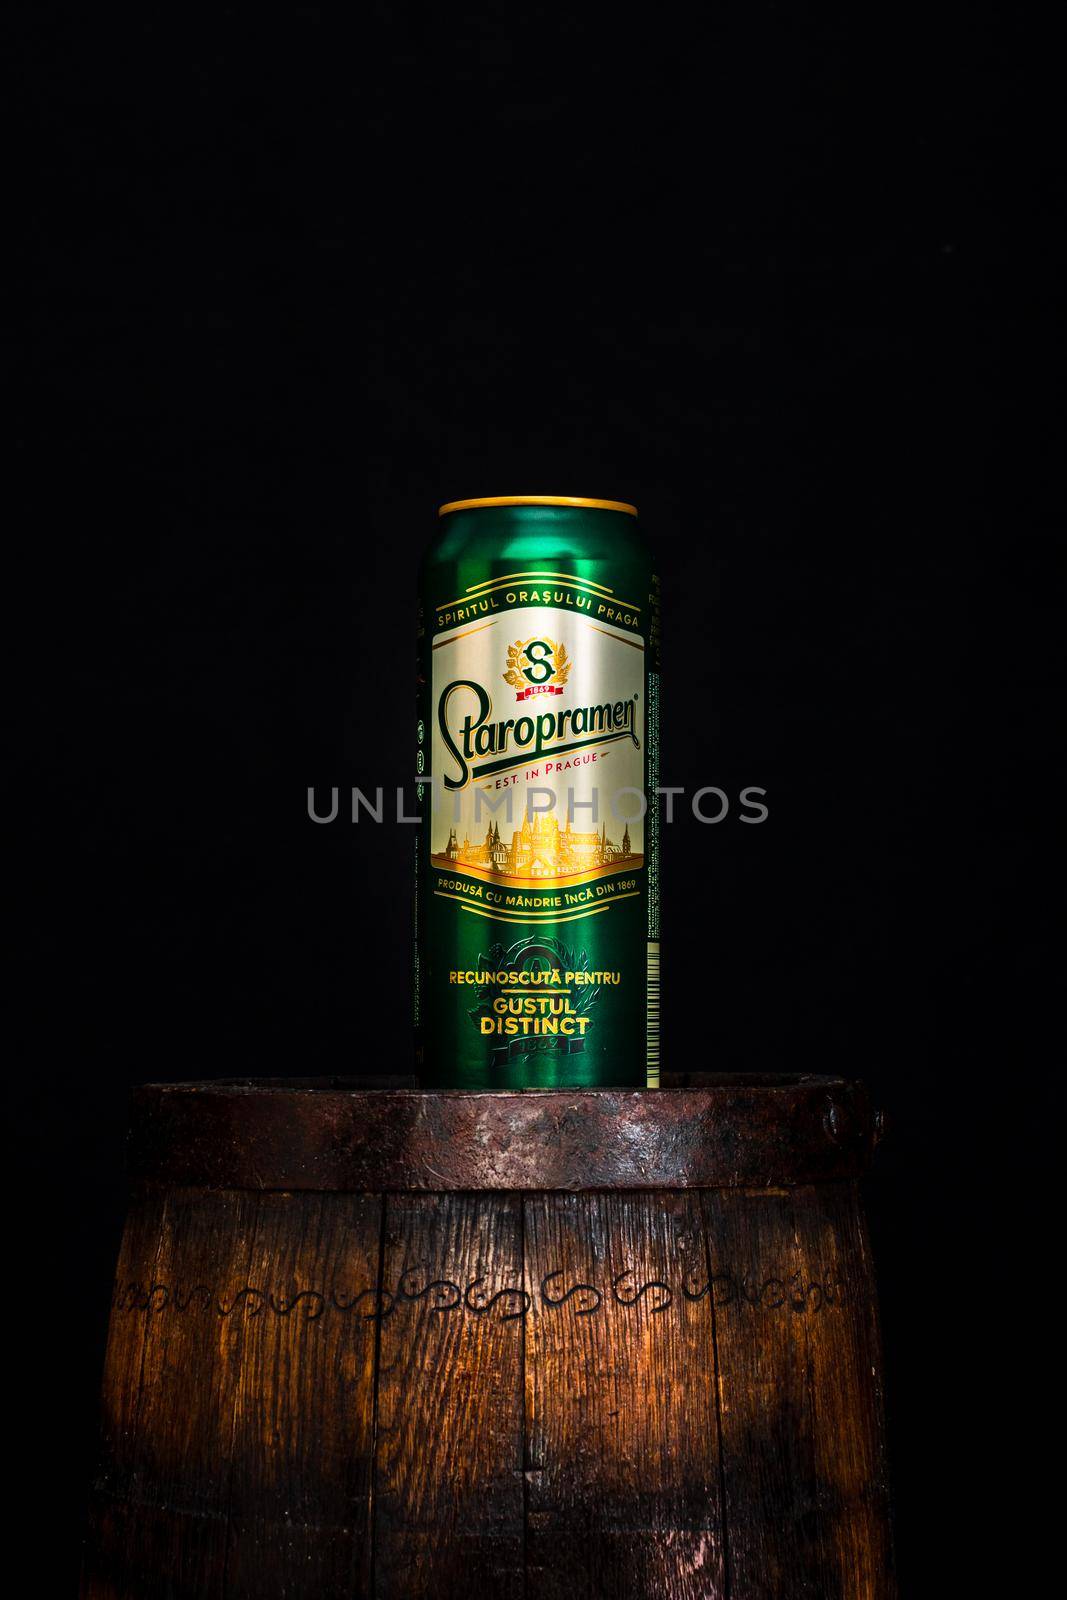 Can of Staropramen beer on beer barrel with dark background. Illustrative editorial photo shot in Bucharest, Romania, 2021 by vladispas